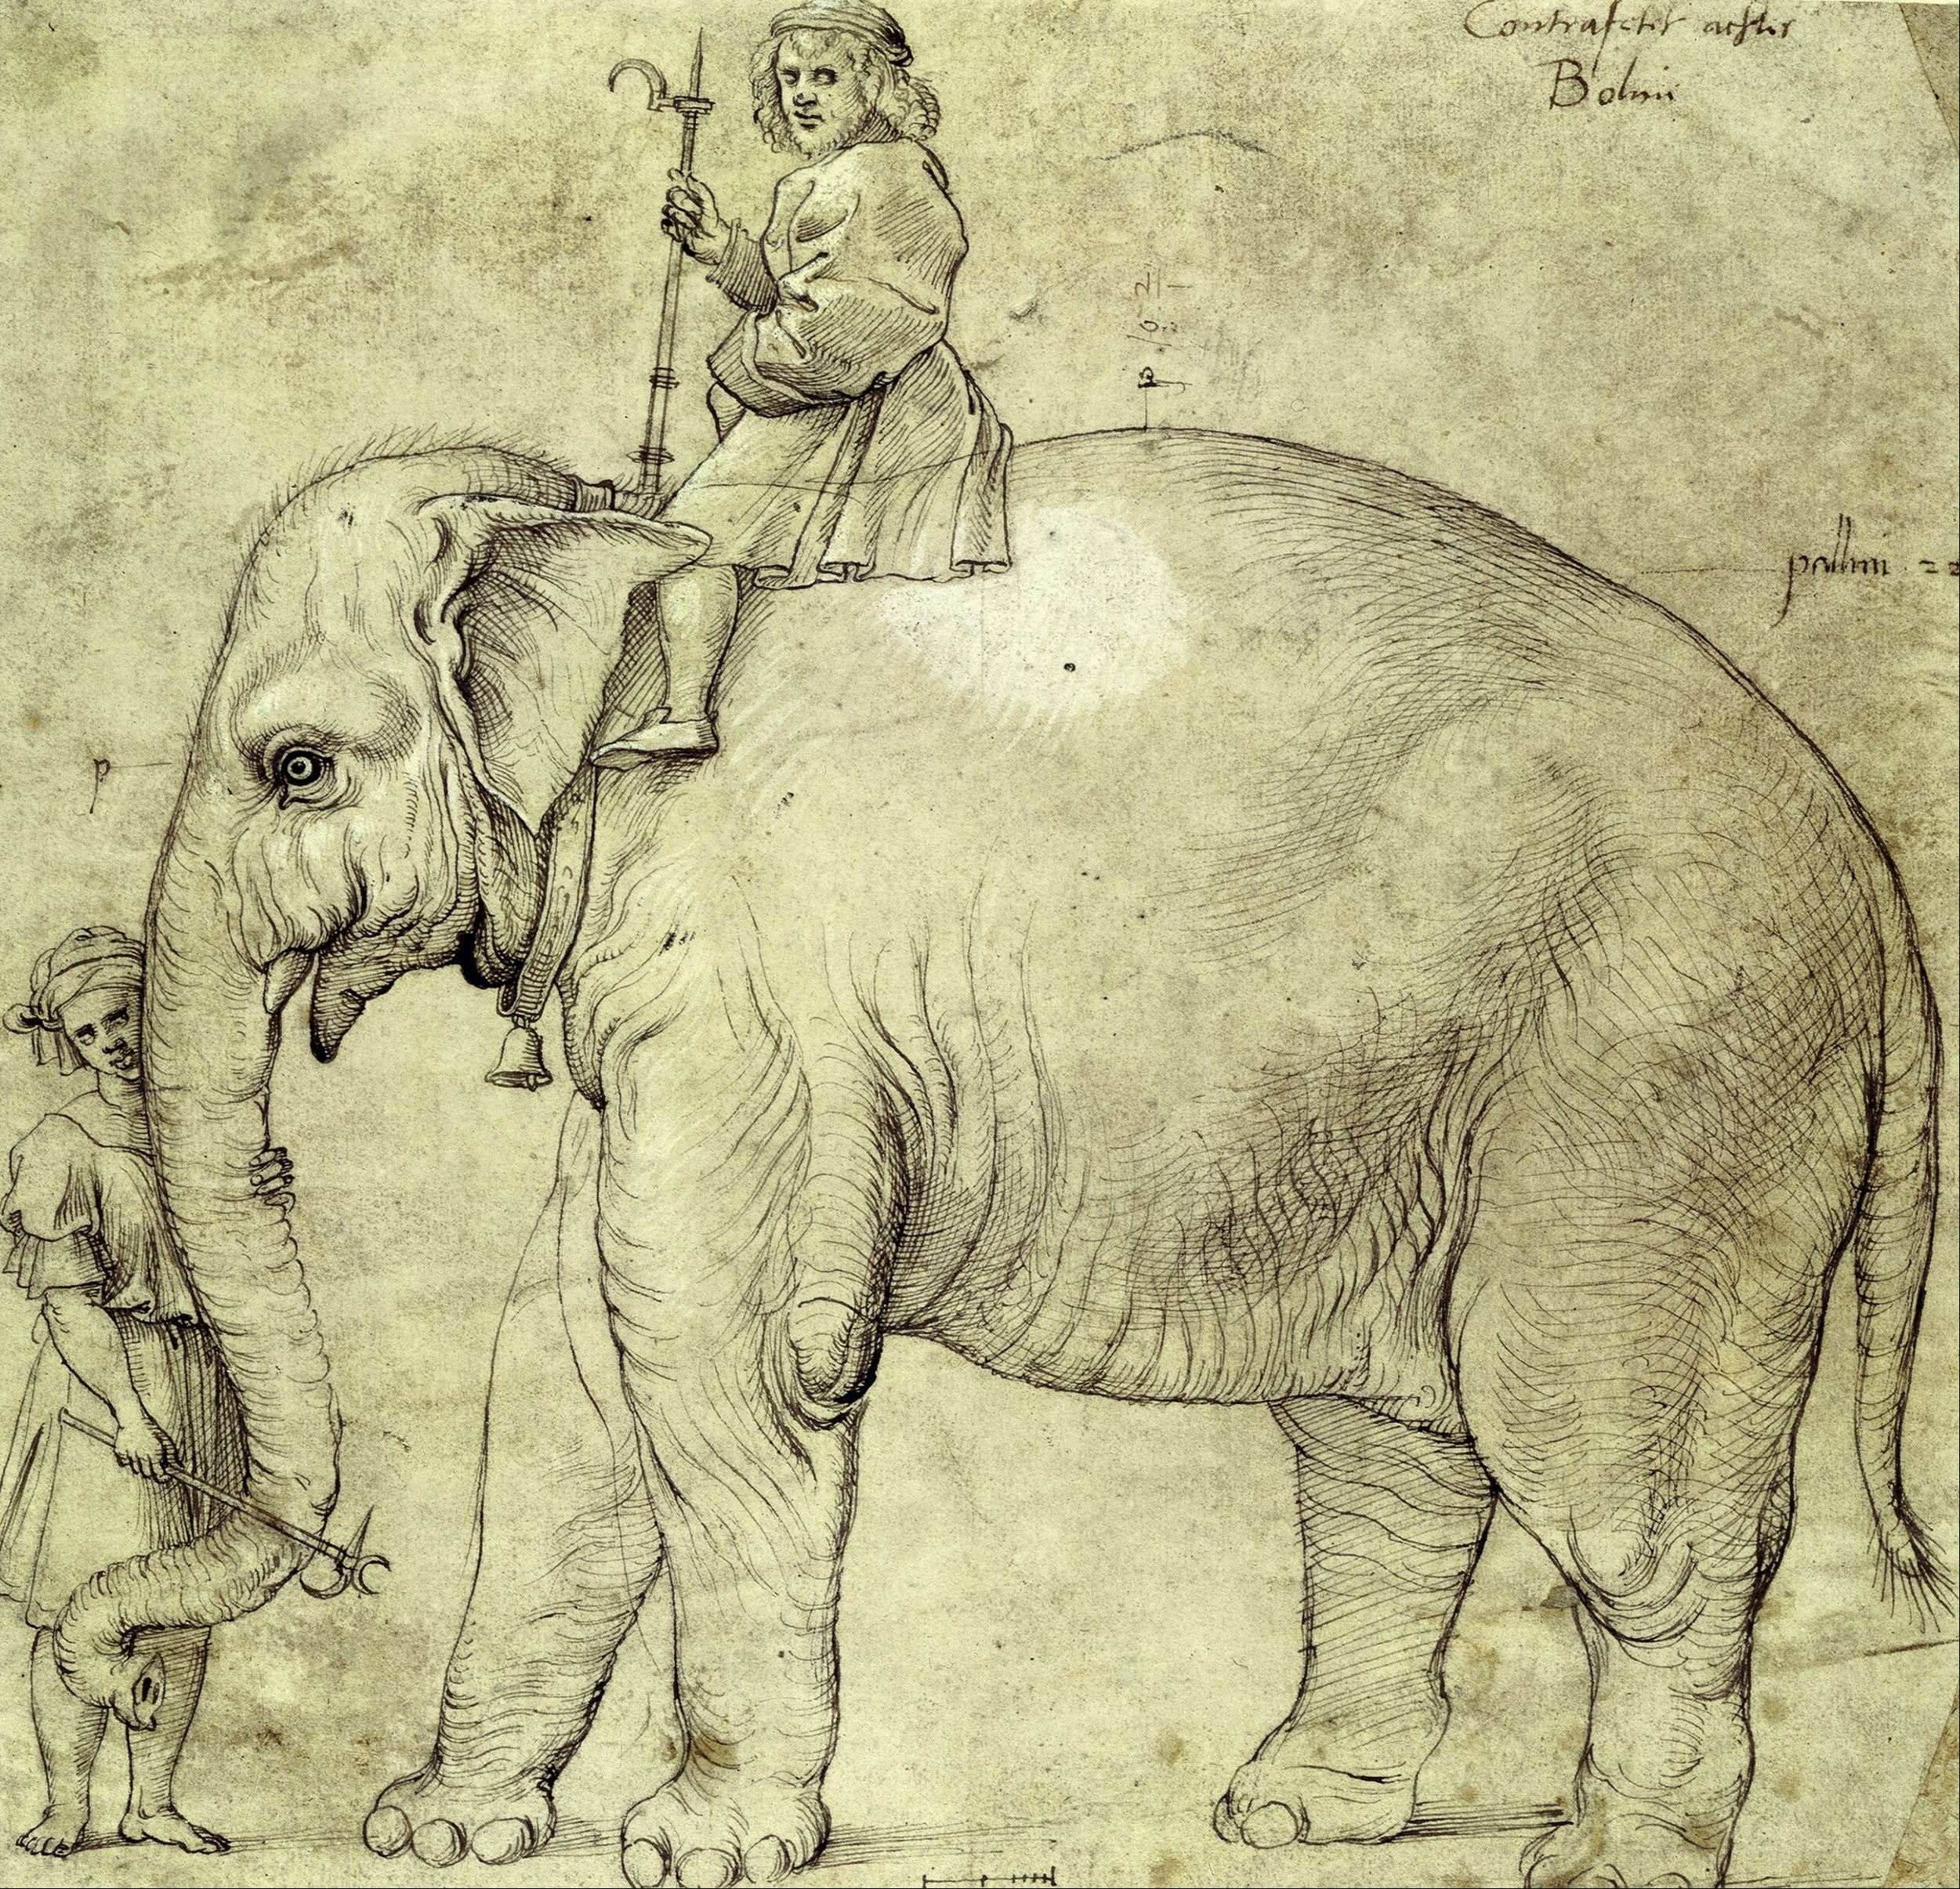 L’Eléphant Hanno by L'Ecole de Raphael Sanzio - 1516 Kupferstichkabinett, National Museums in Berlin